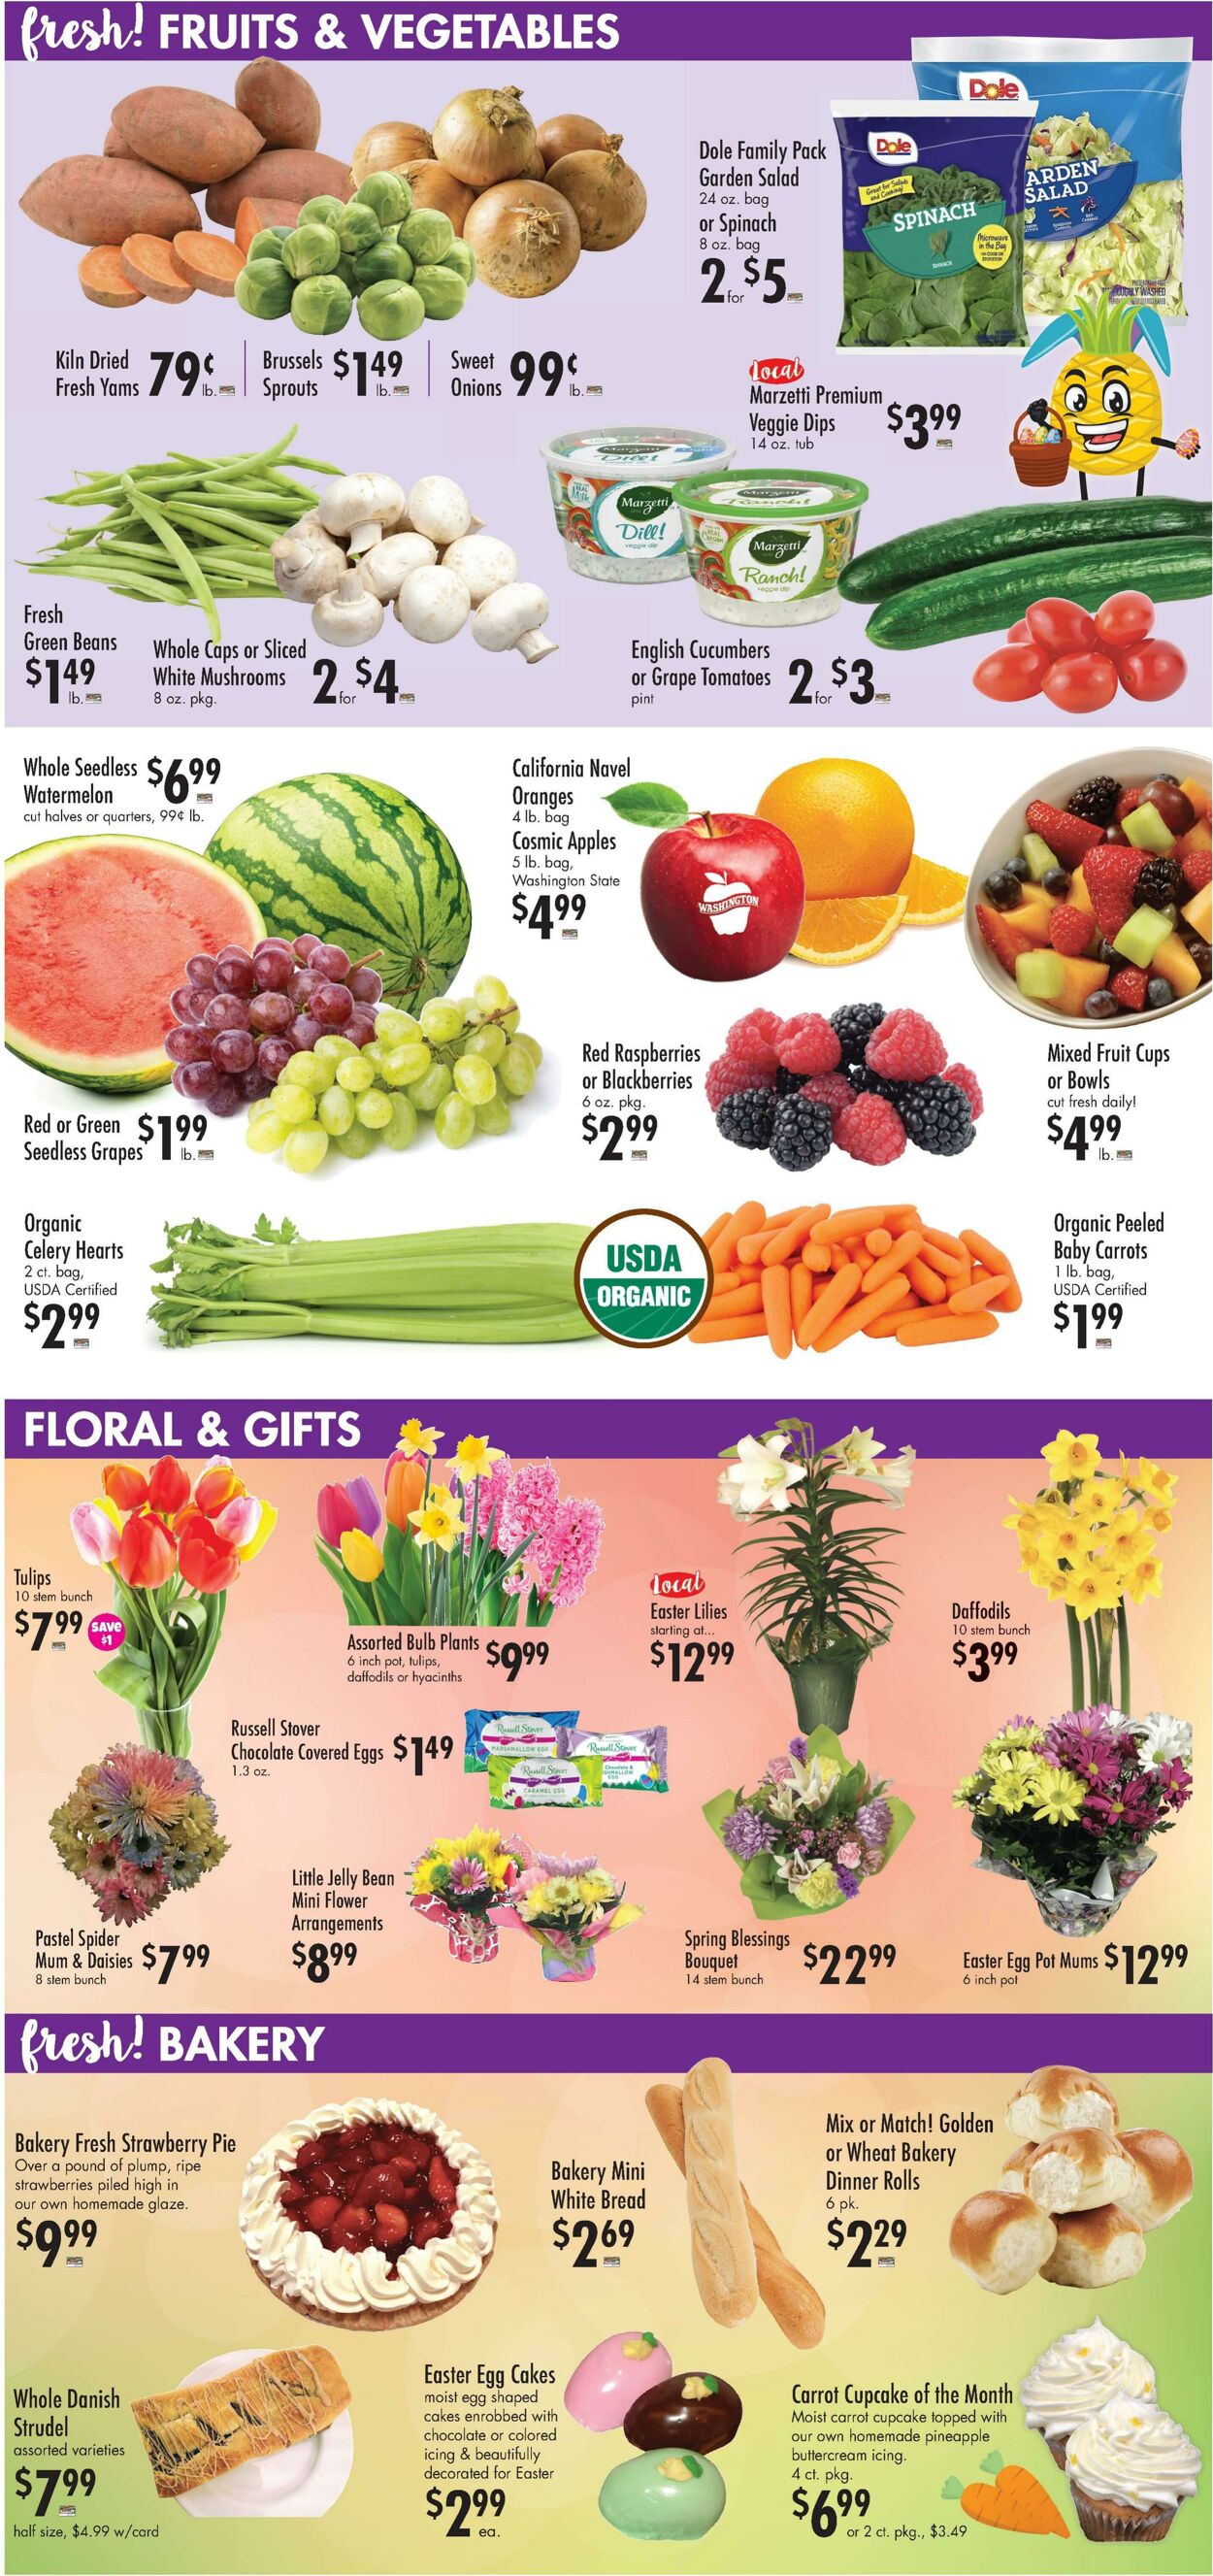 Weekly ad Buehler's Fresh Food 04/05/2023 - 04/11/2023